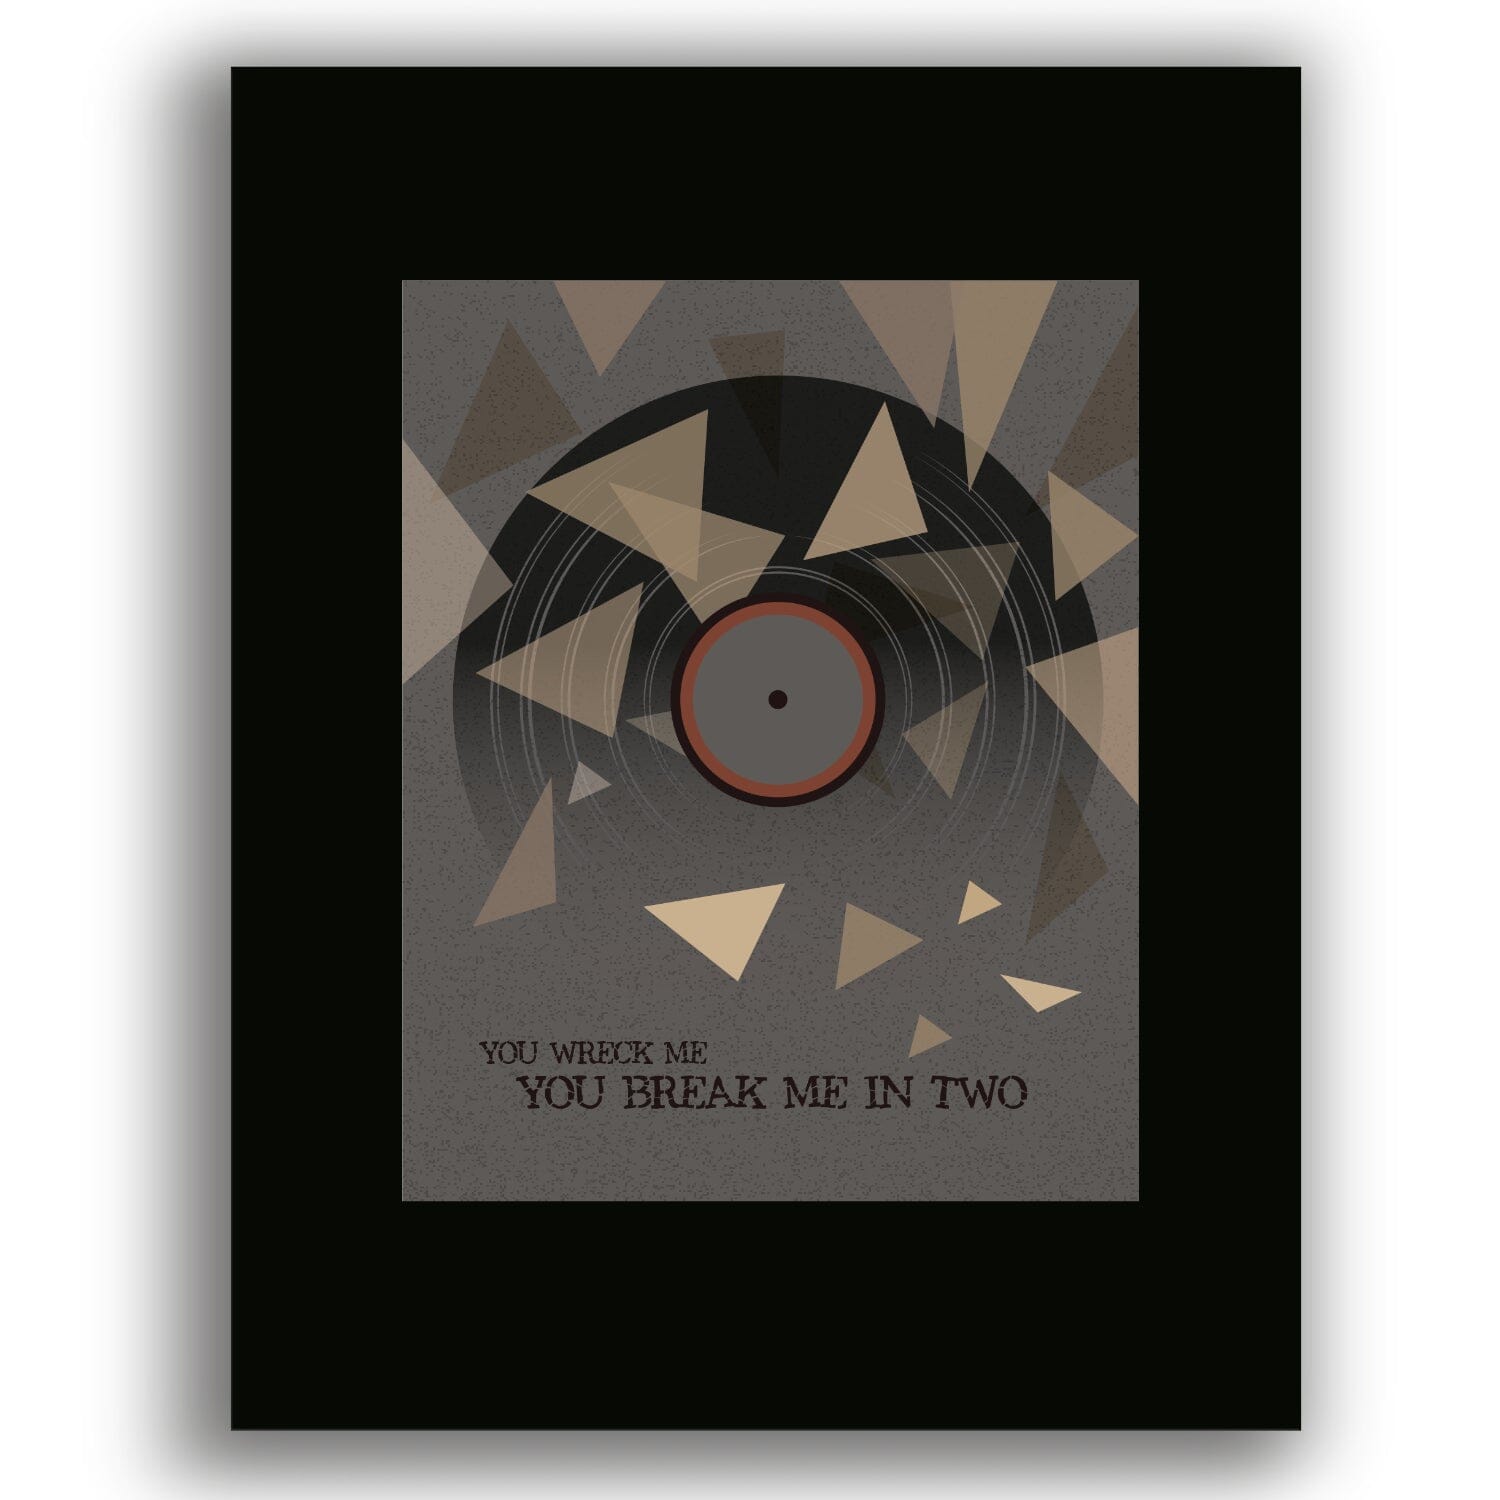 You Wreck me by Tom Petty - Song Lyrics Art Poster Print Song Lyrics Art Song Lyrics Art 8x10 Black Matted Print 